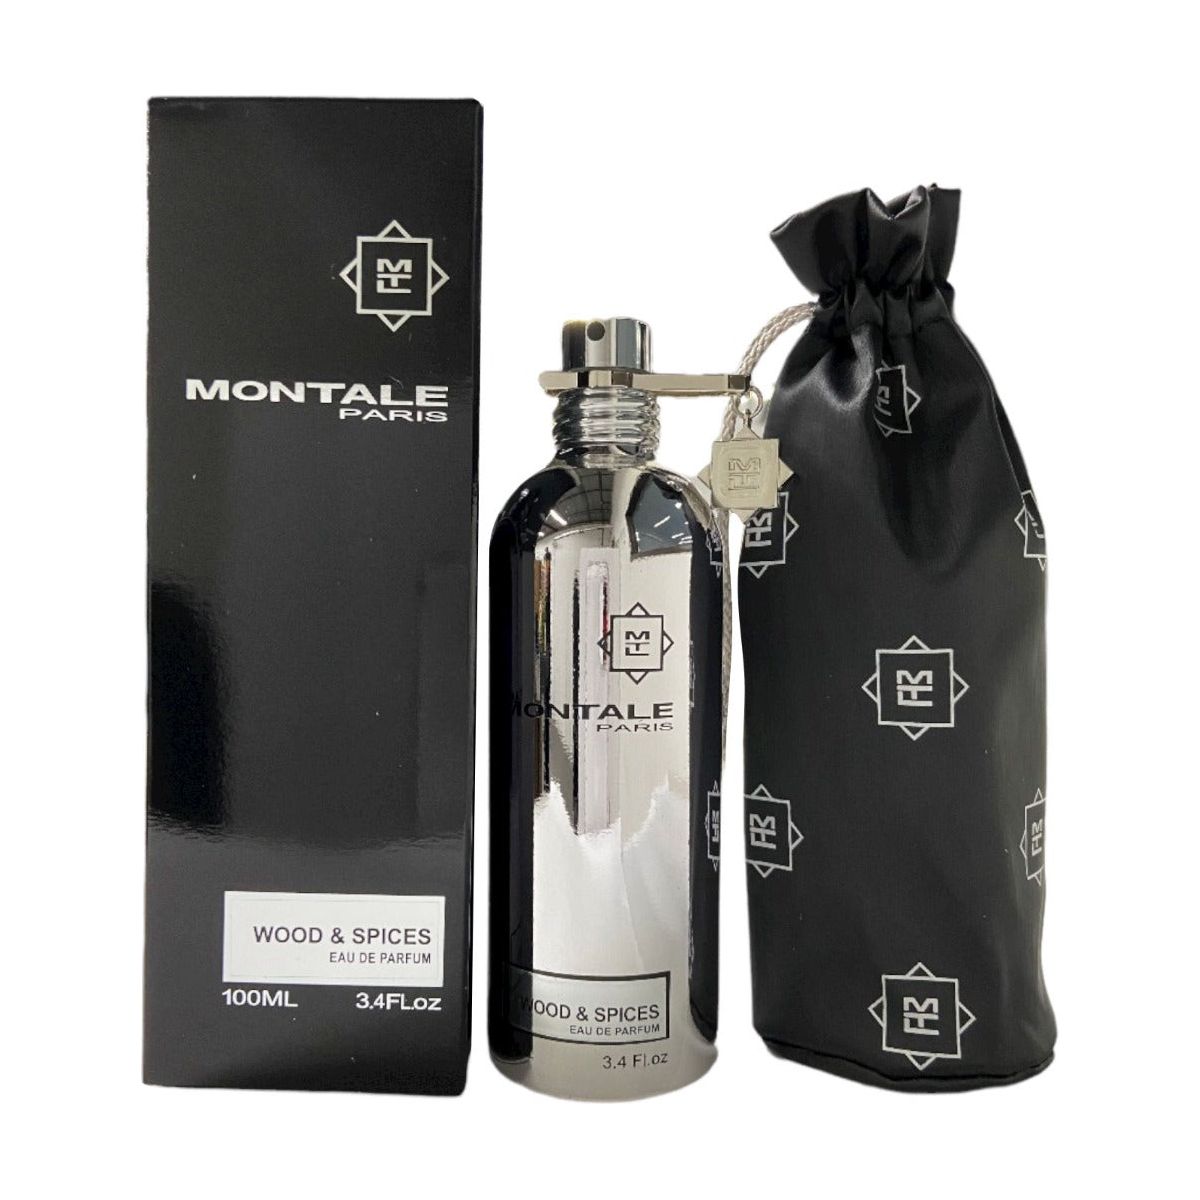 Montale Spicy Aoud / Montale EDP Spray 3.3 oz (100 ml) (u